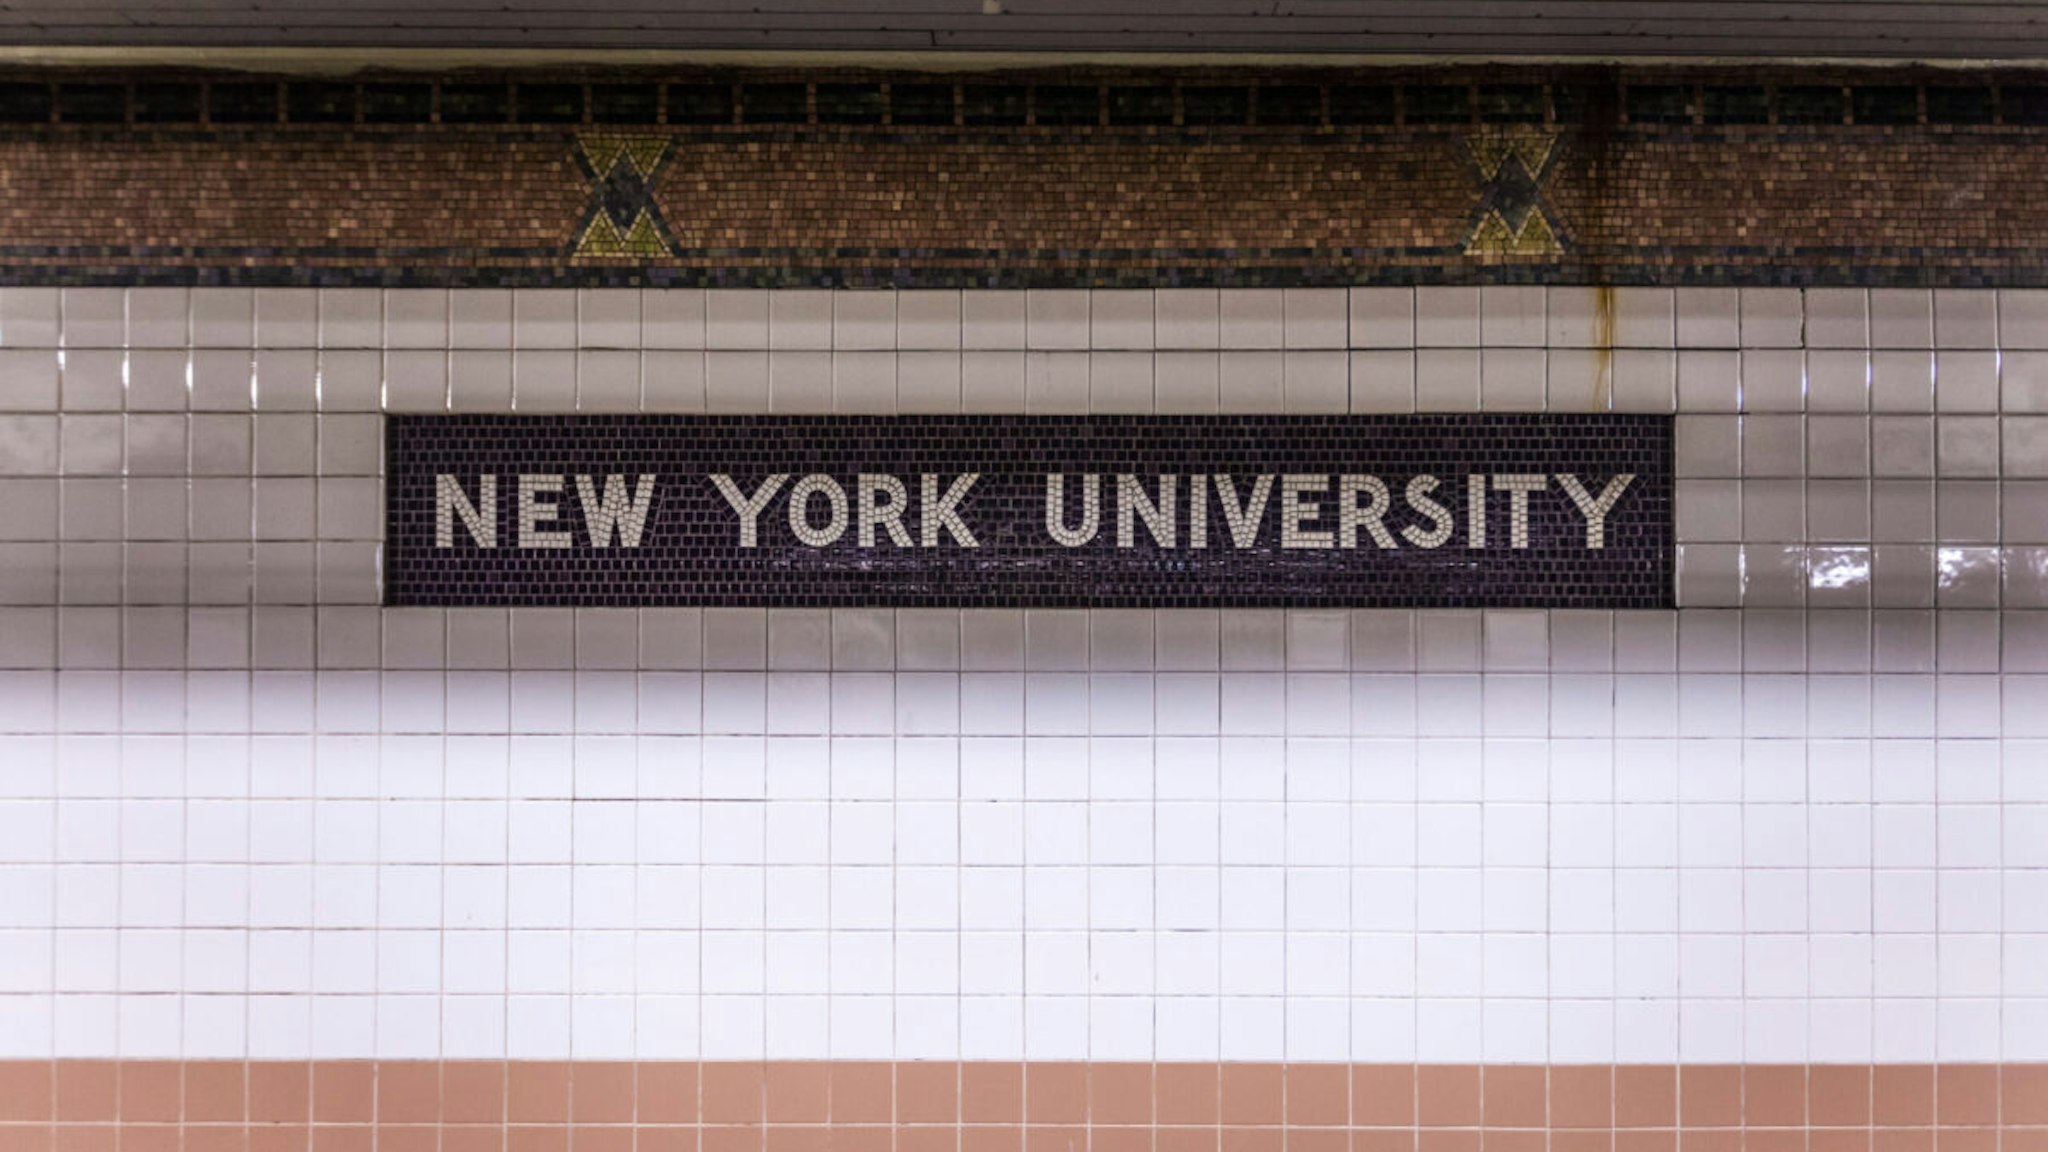 Subway tile mosaic for New York University. New York City, NY. USA